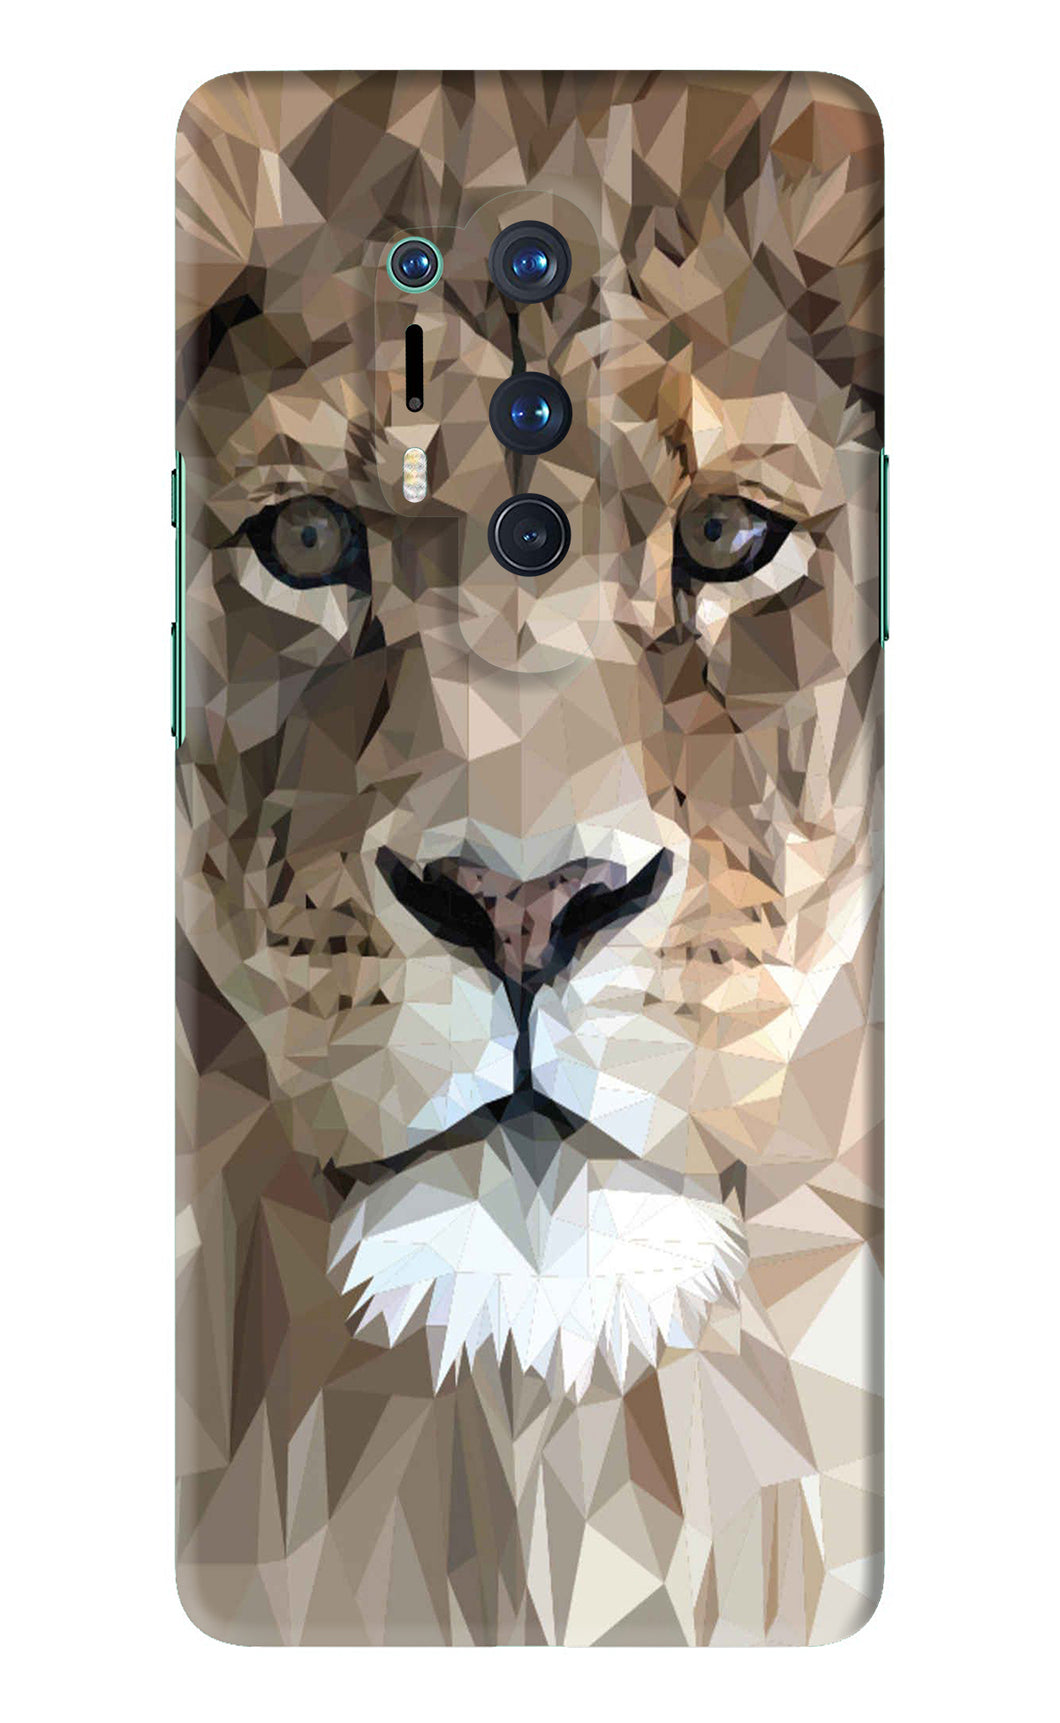 Lion Art OnePlus 8 Pro Back Skin Wrap